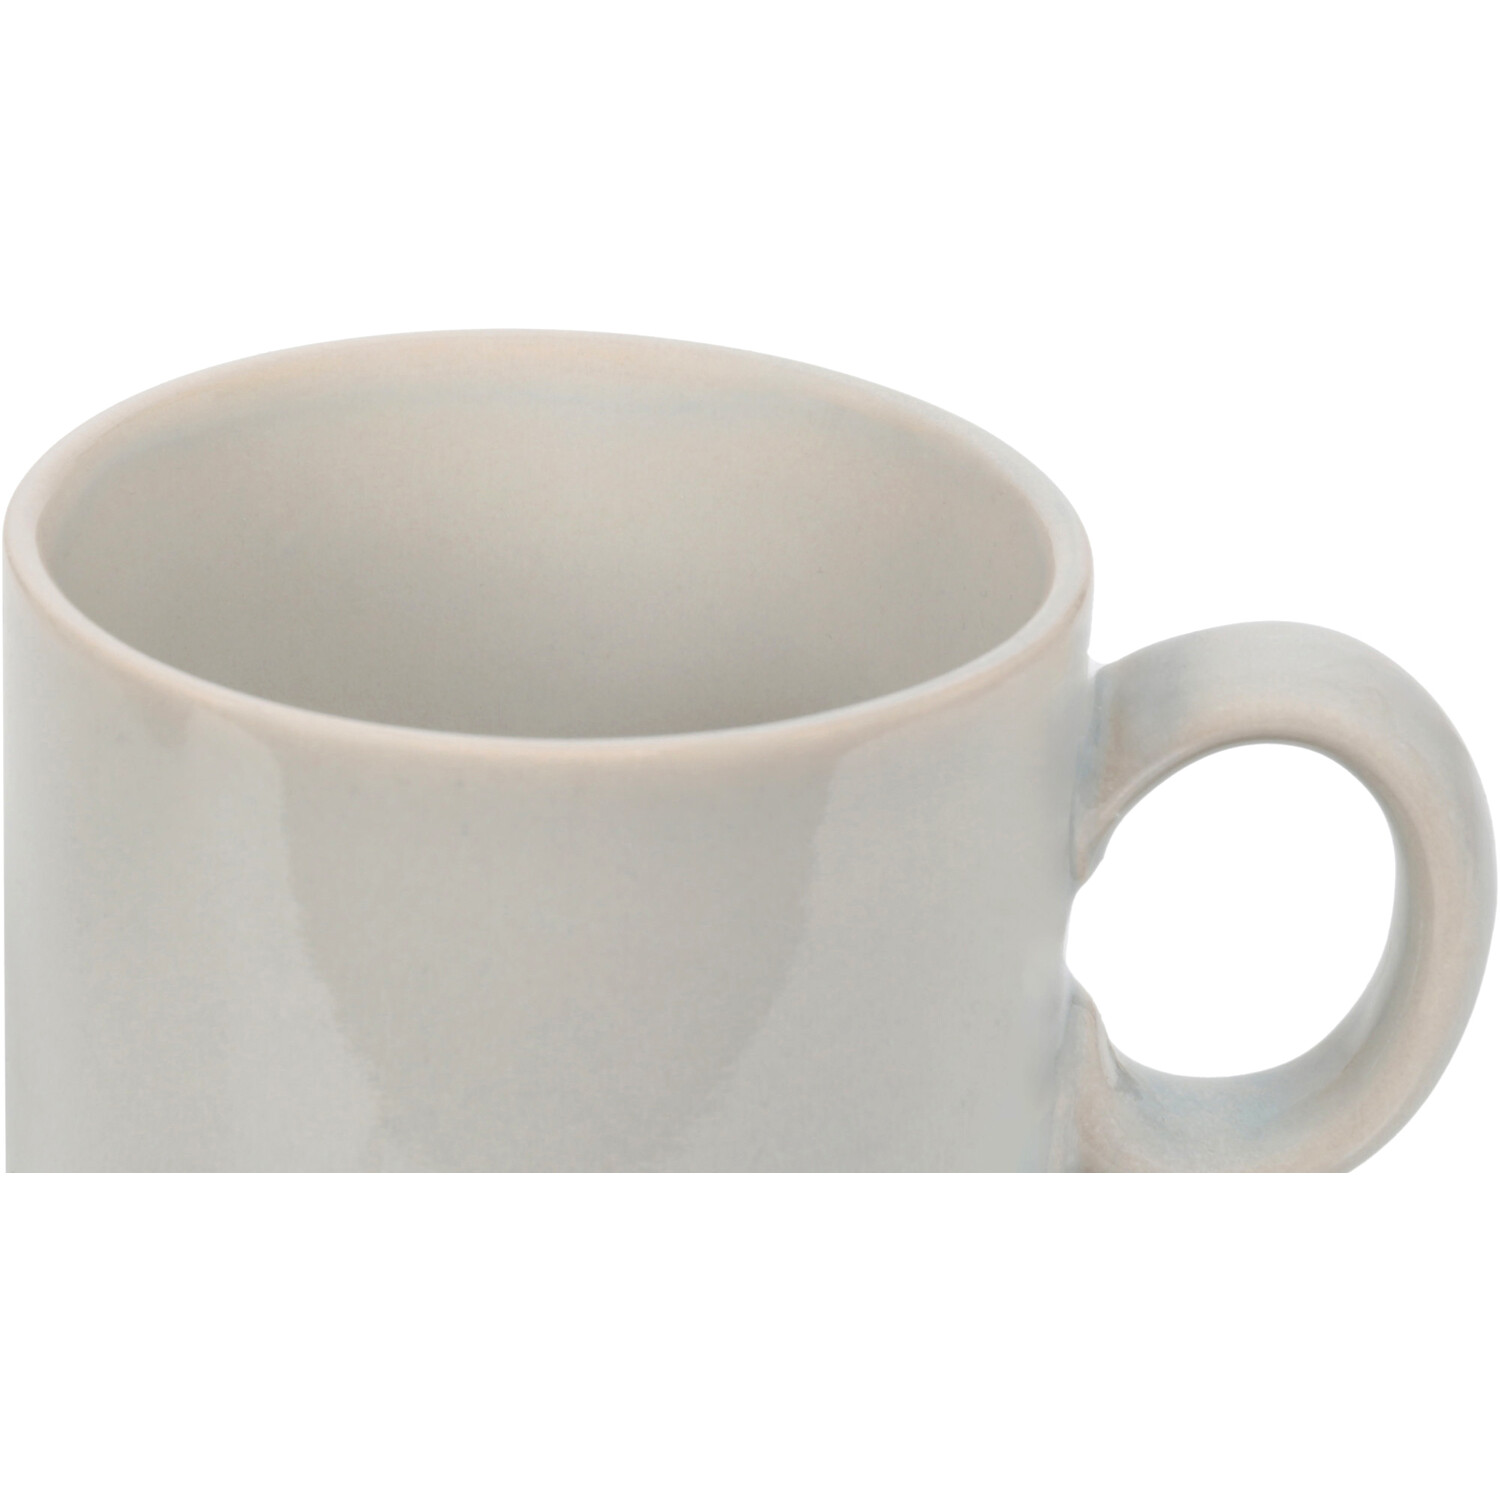 Single Reactive Glaze Mug in Assorted styles Image 3